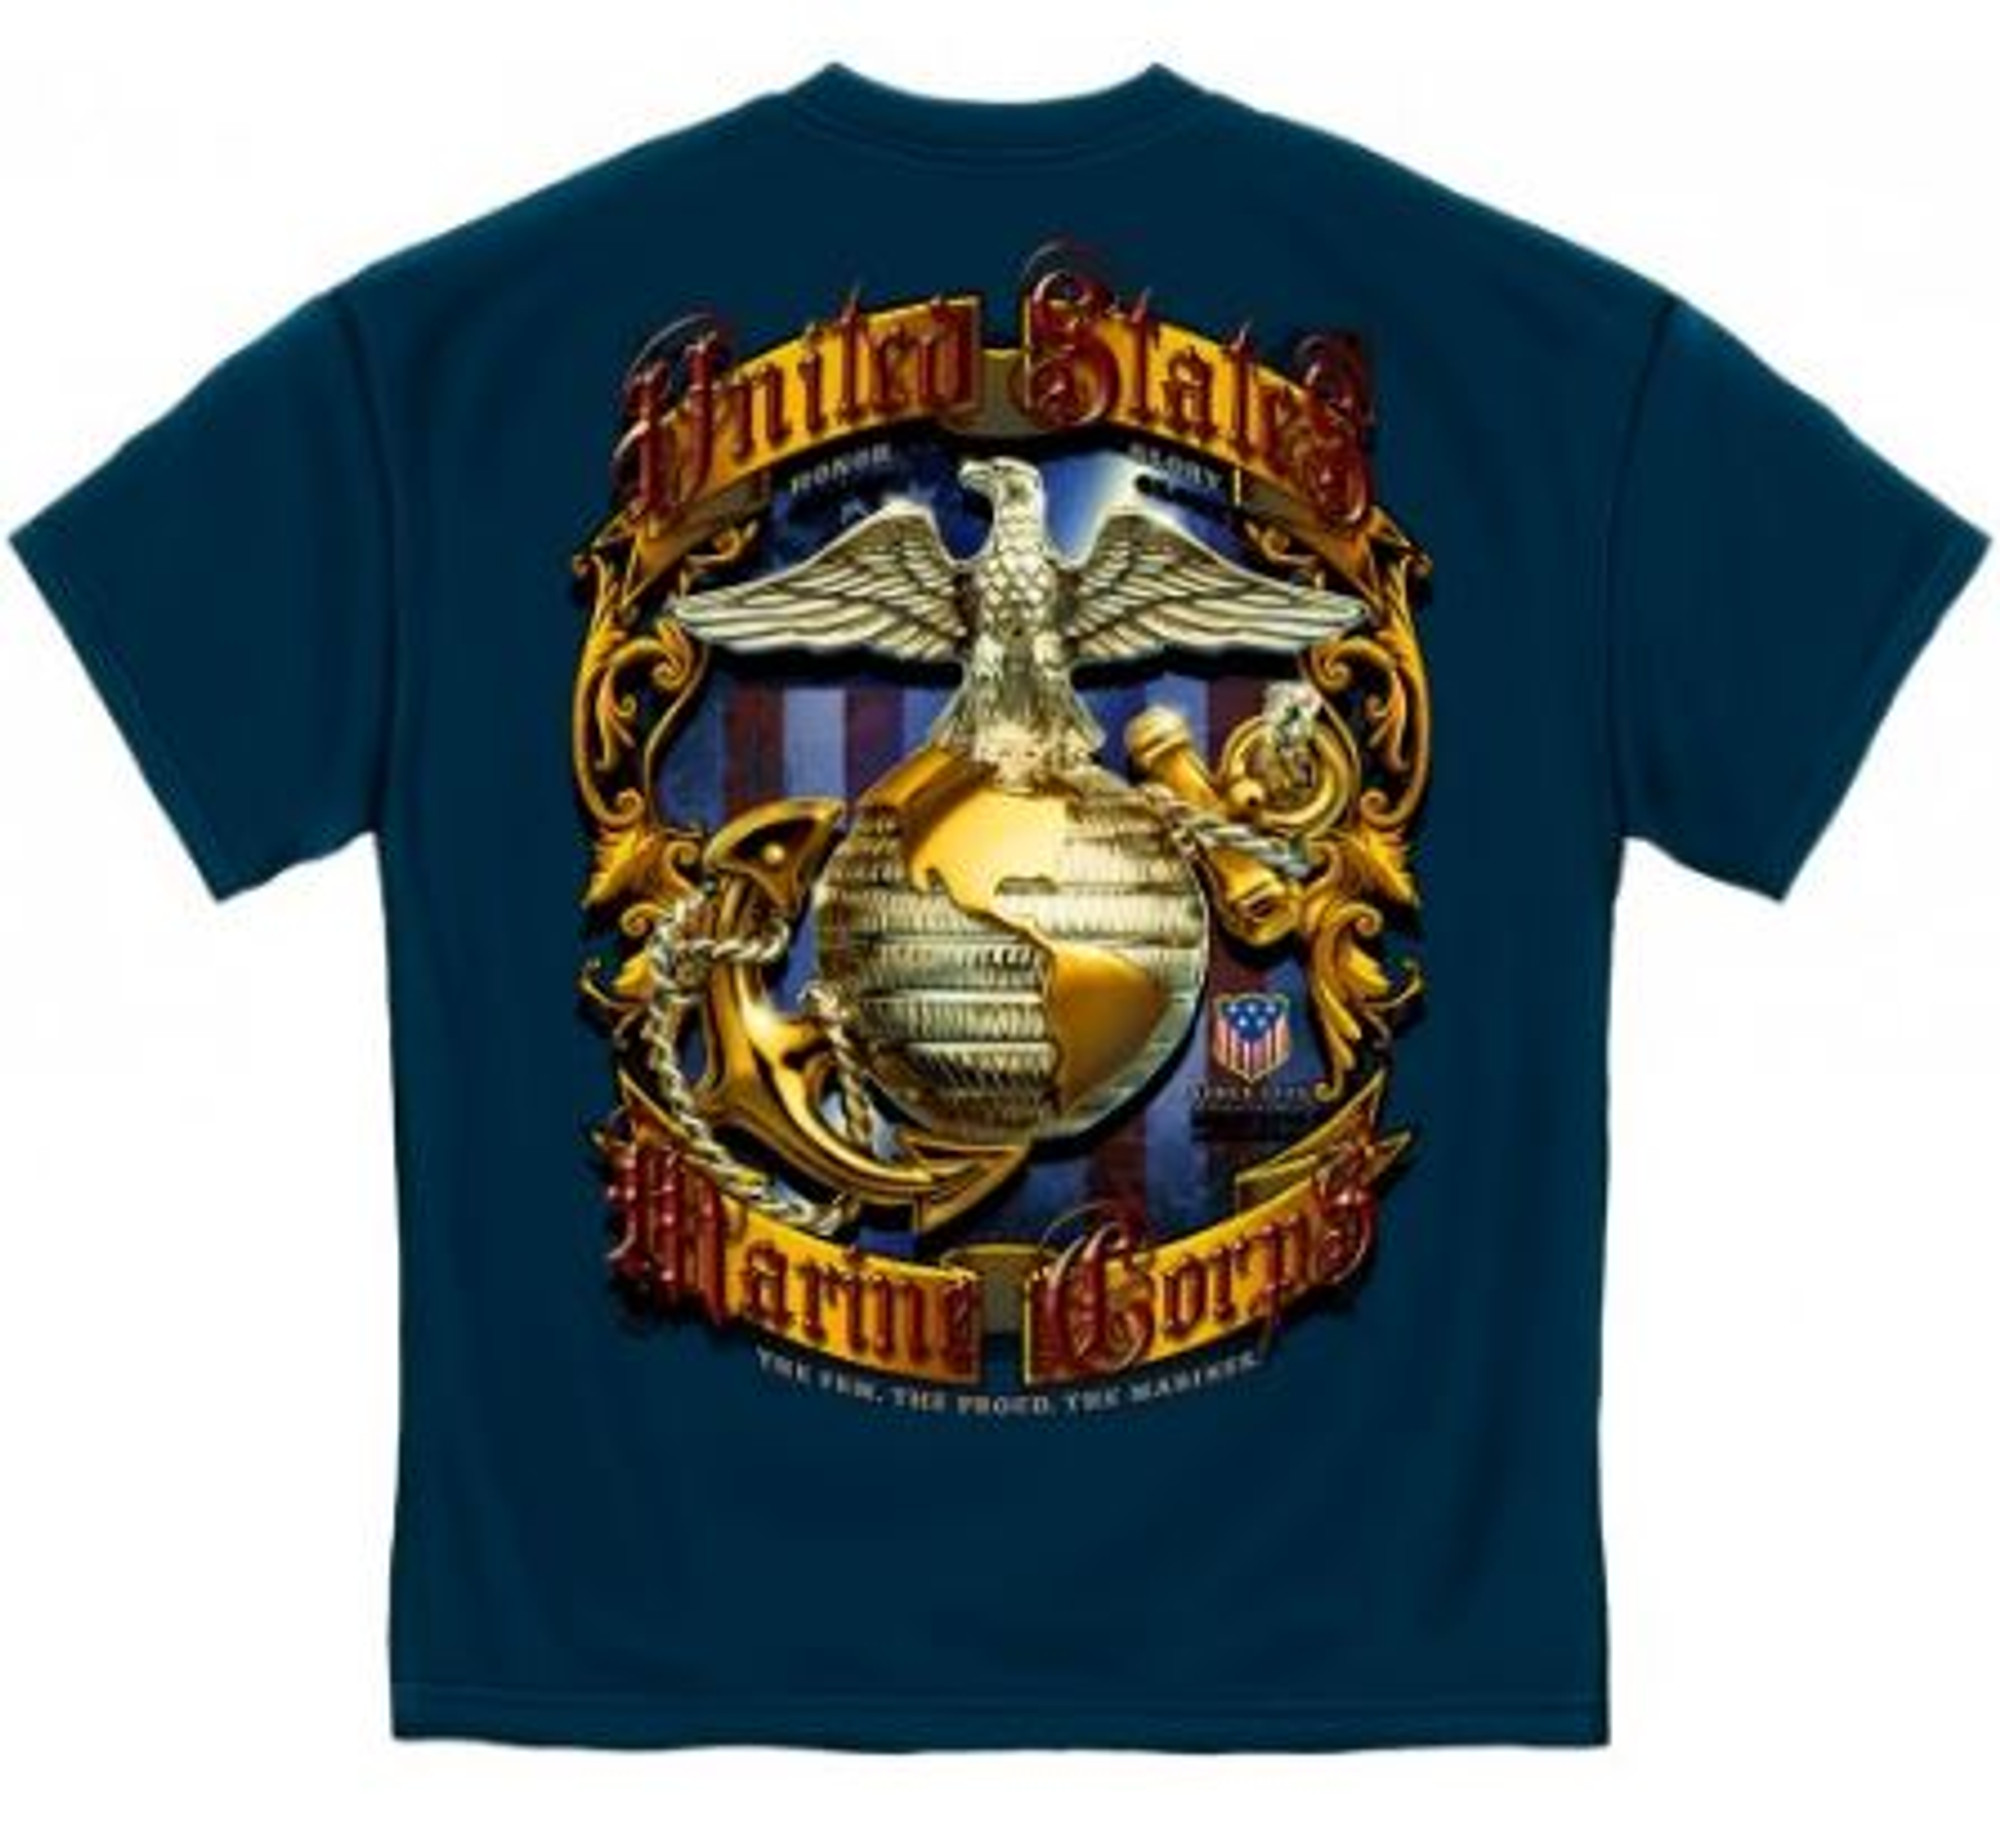 USMC "Traditional Foil" T-Shirt